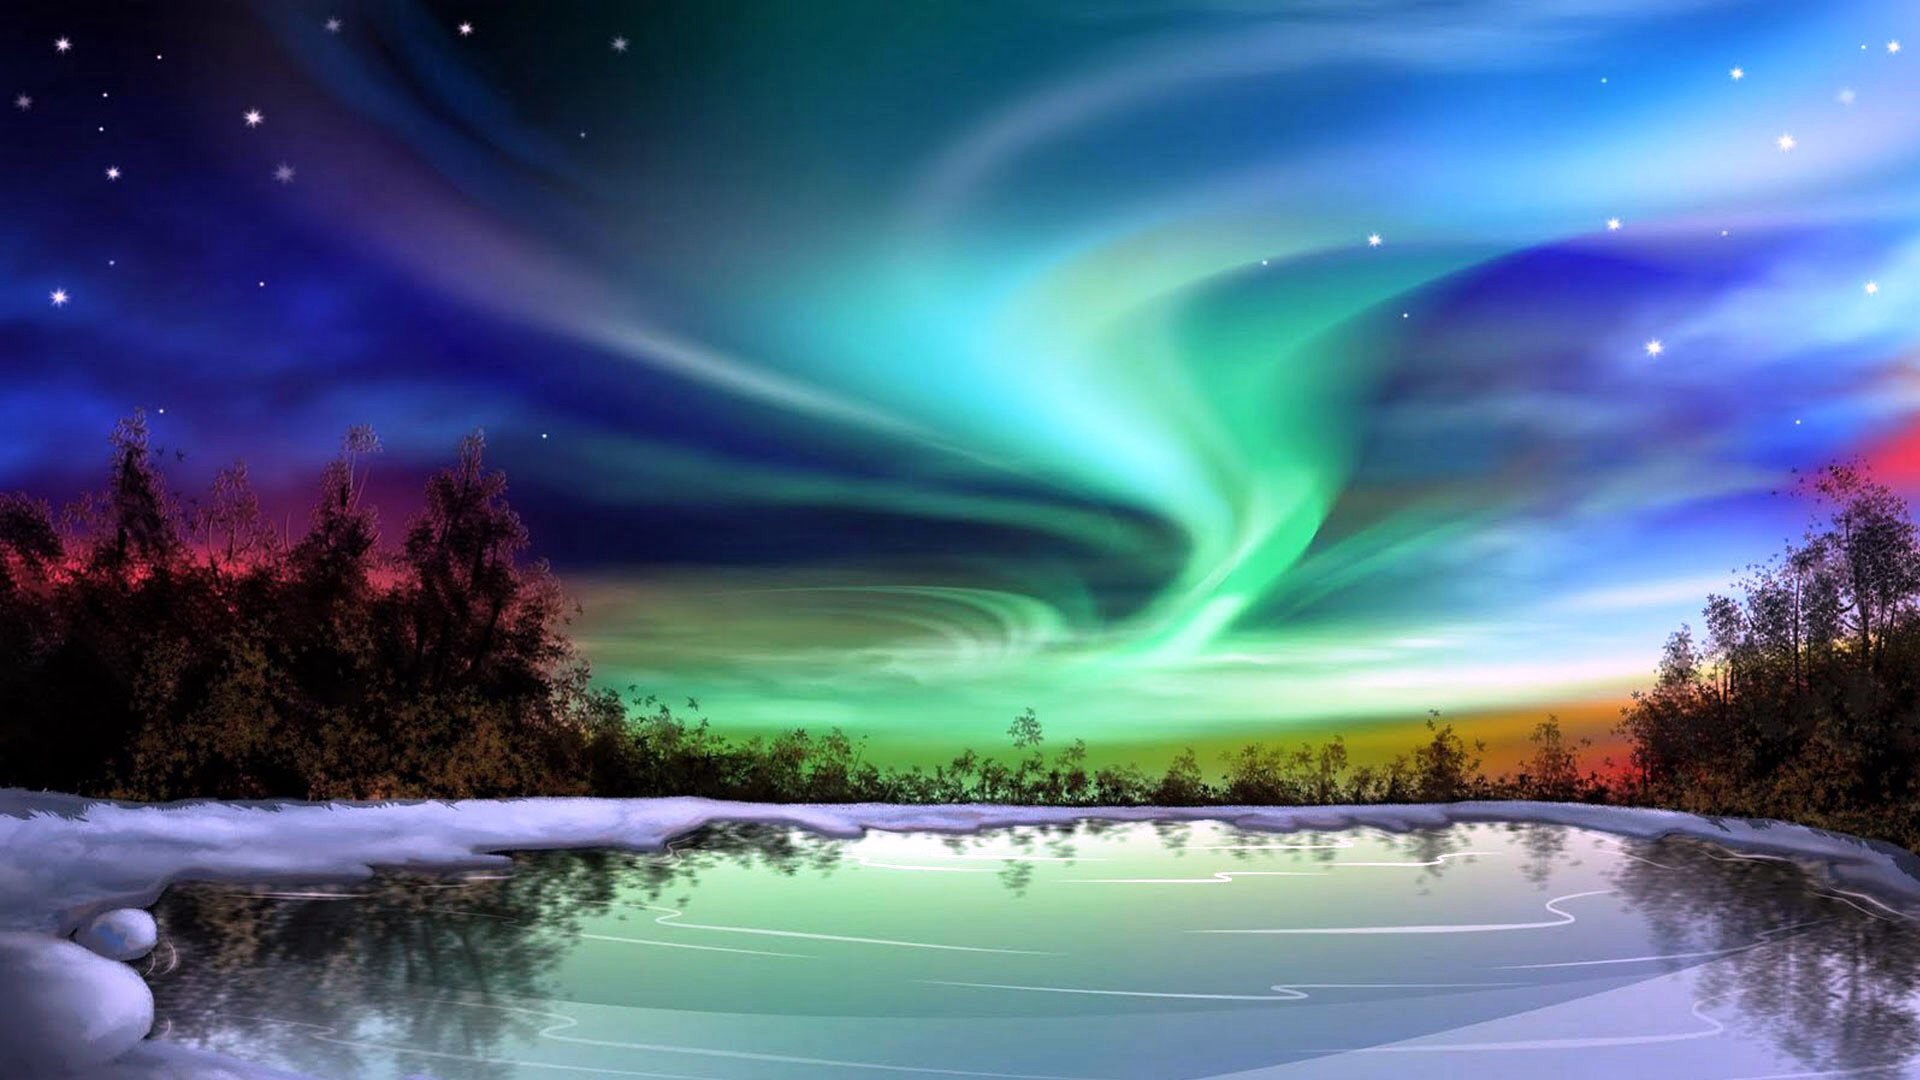 Aurora borealis images Northern lights aurora borealis 39533089